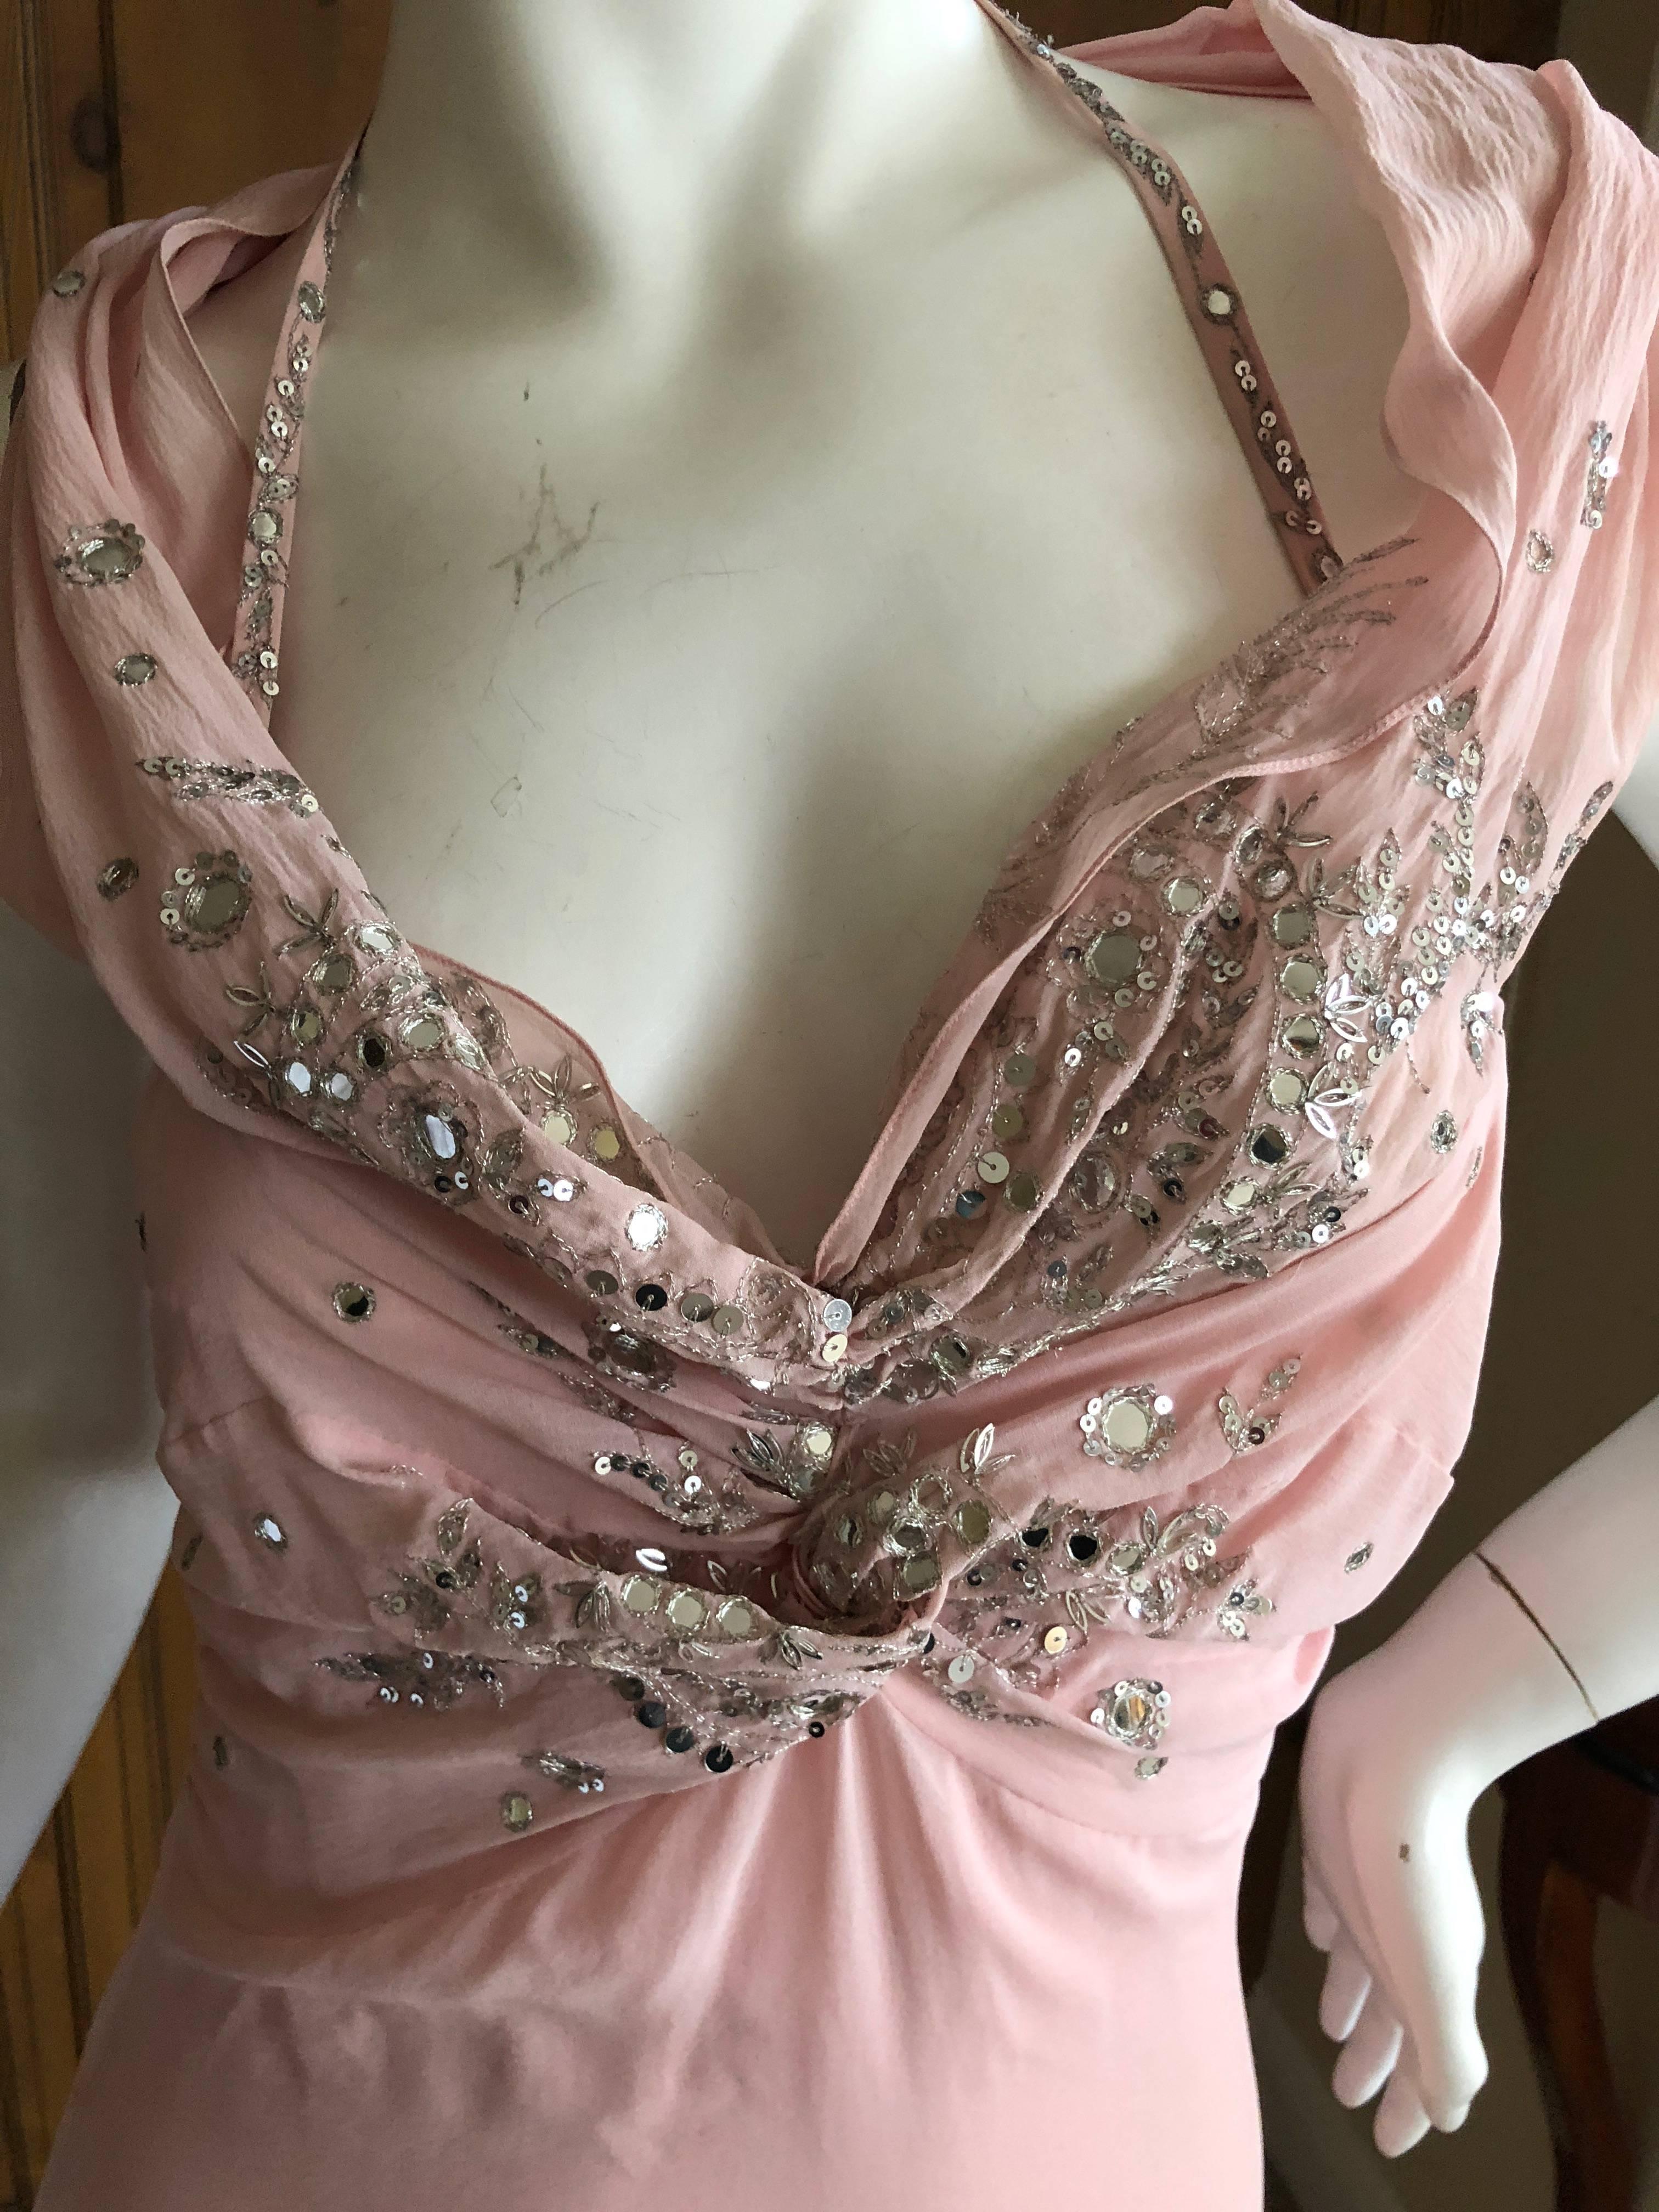 Christian Dior by John Galliano Fall 2004 Raj Style Embellished Silk Dress.

Size 38 , runs small
 
Bust 36